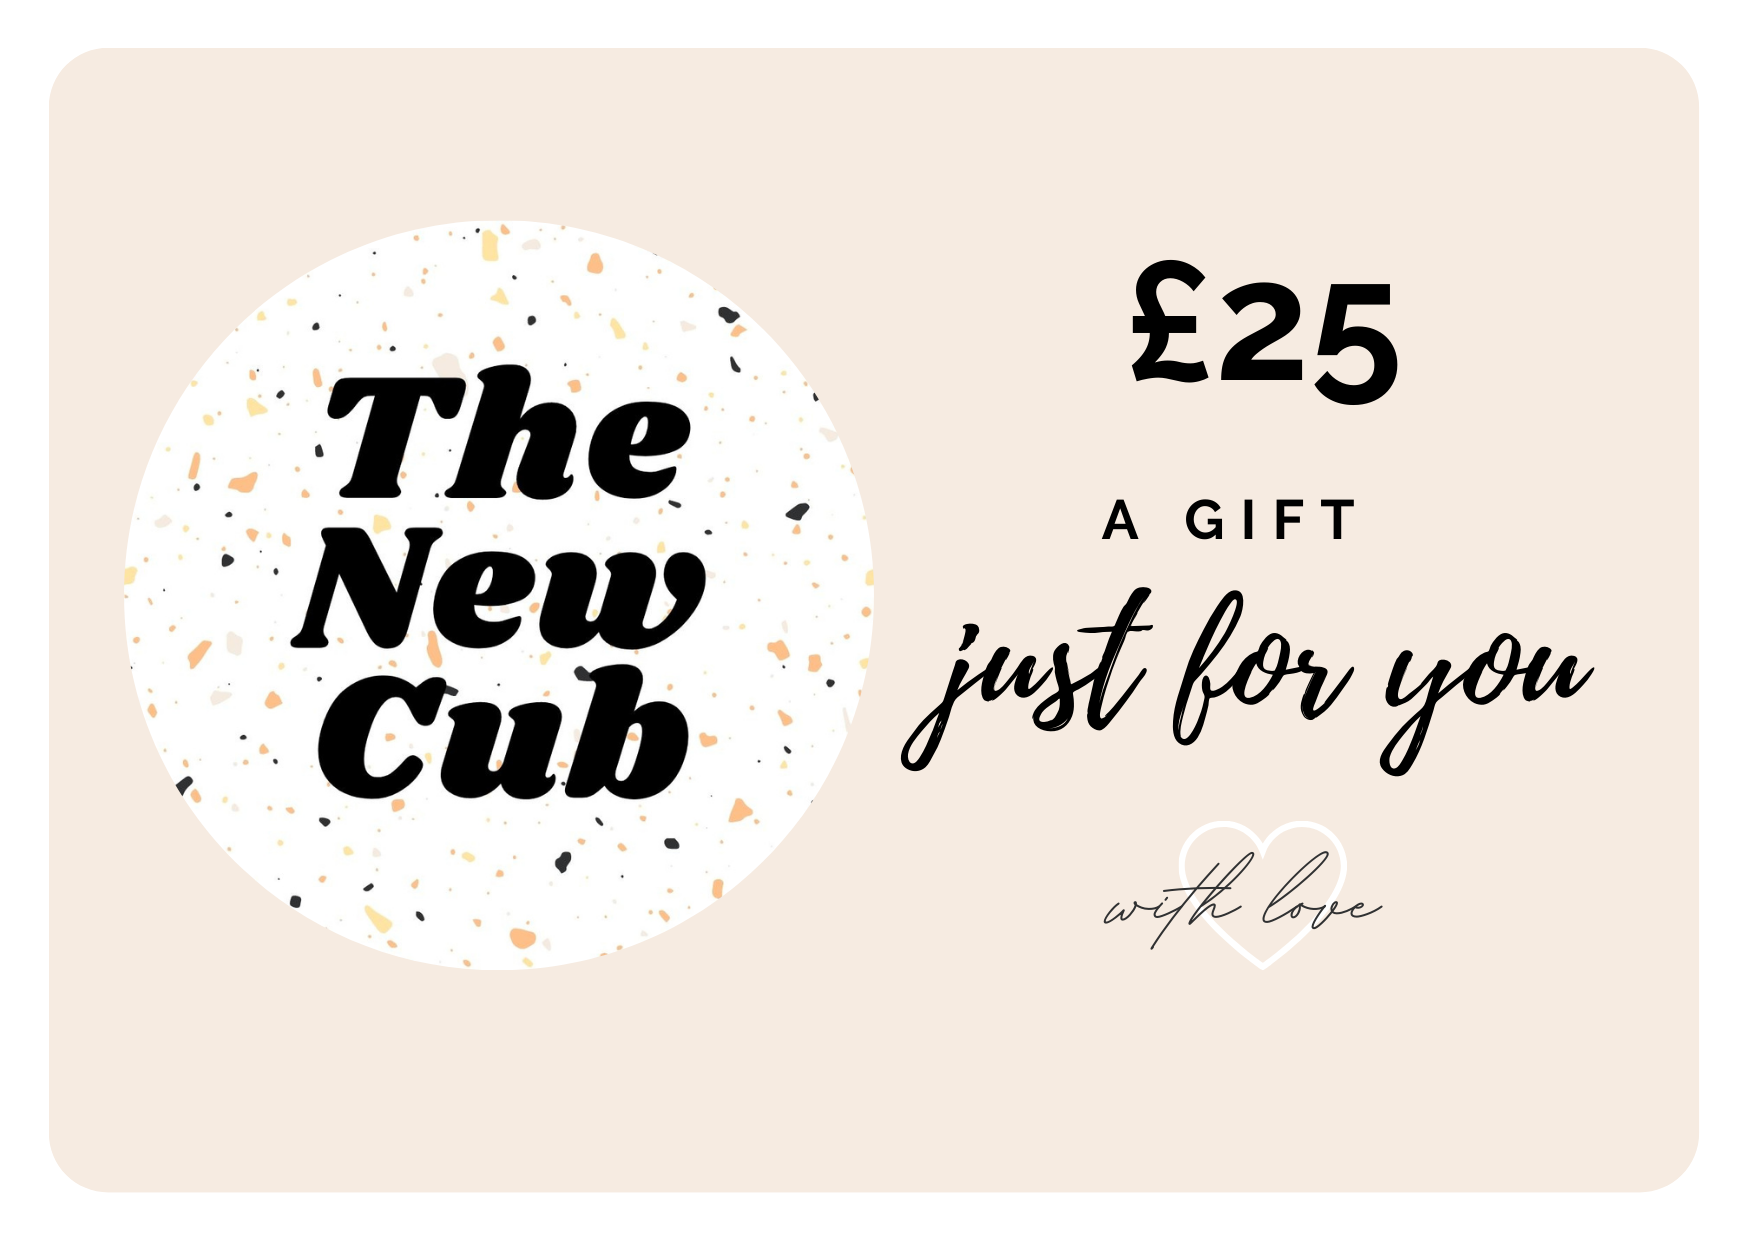 The New Cub Gift Card E-voucher